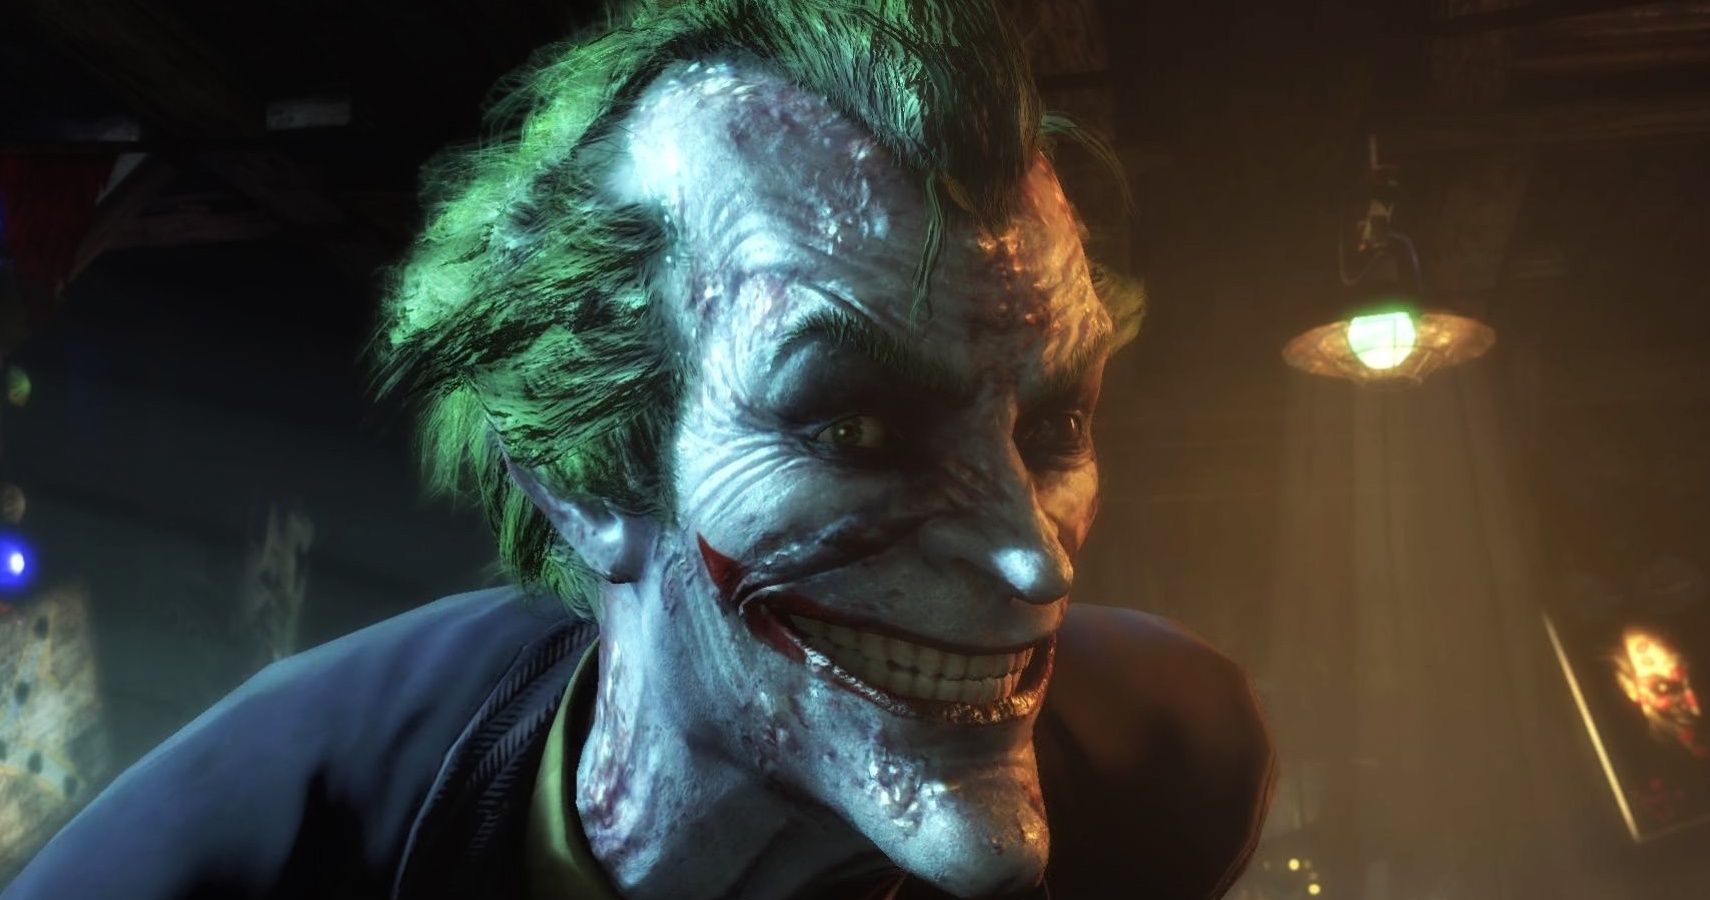 2. The Joker's iconic green hair in the Batman comics - wide 5